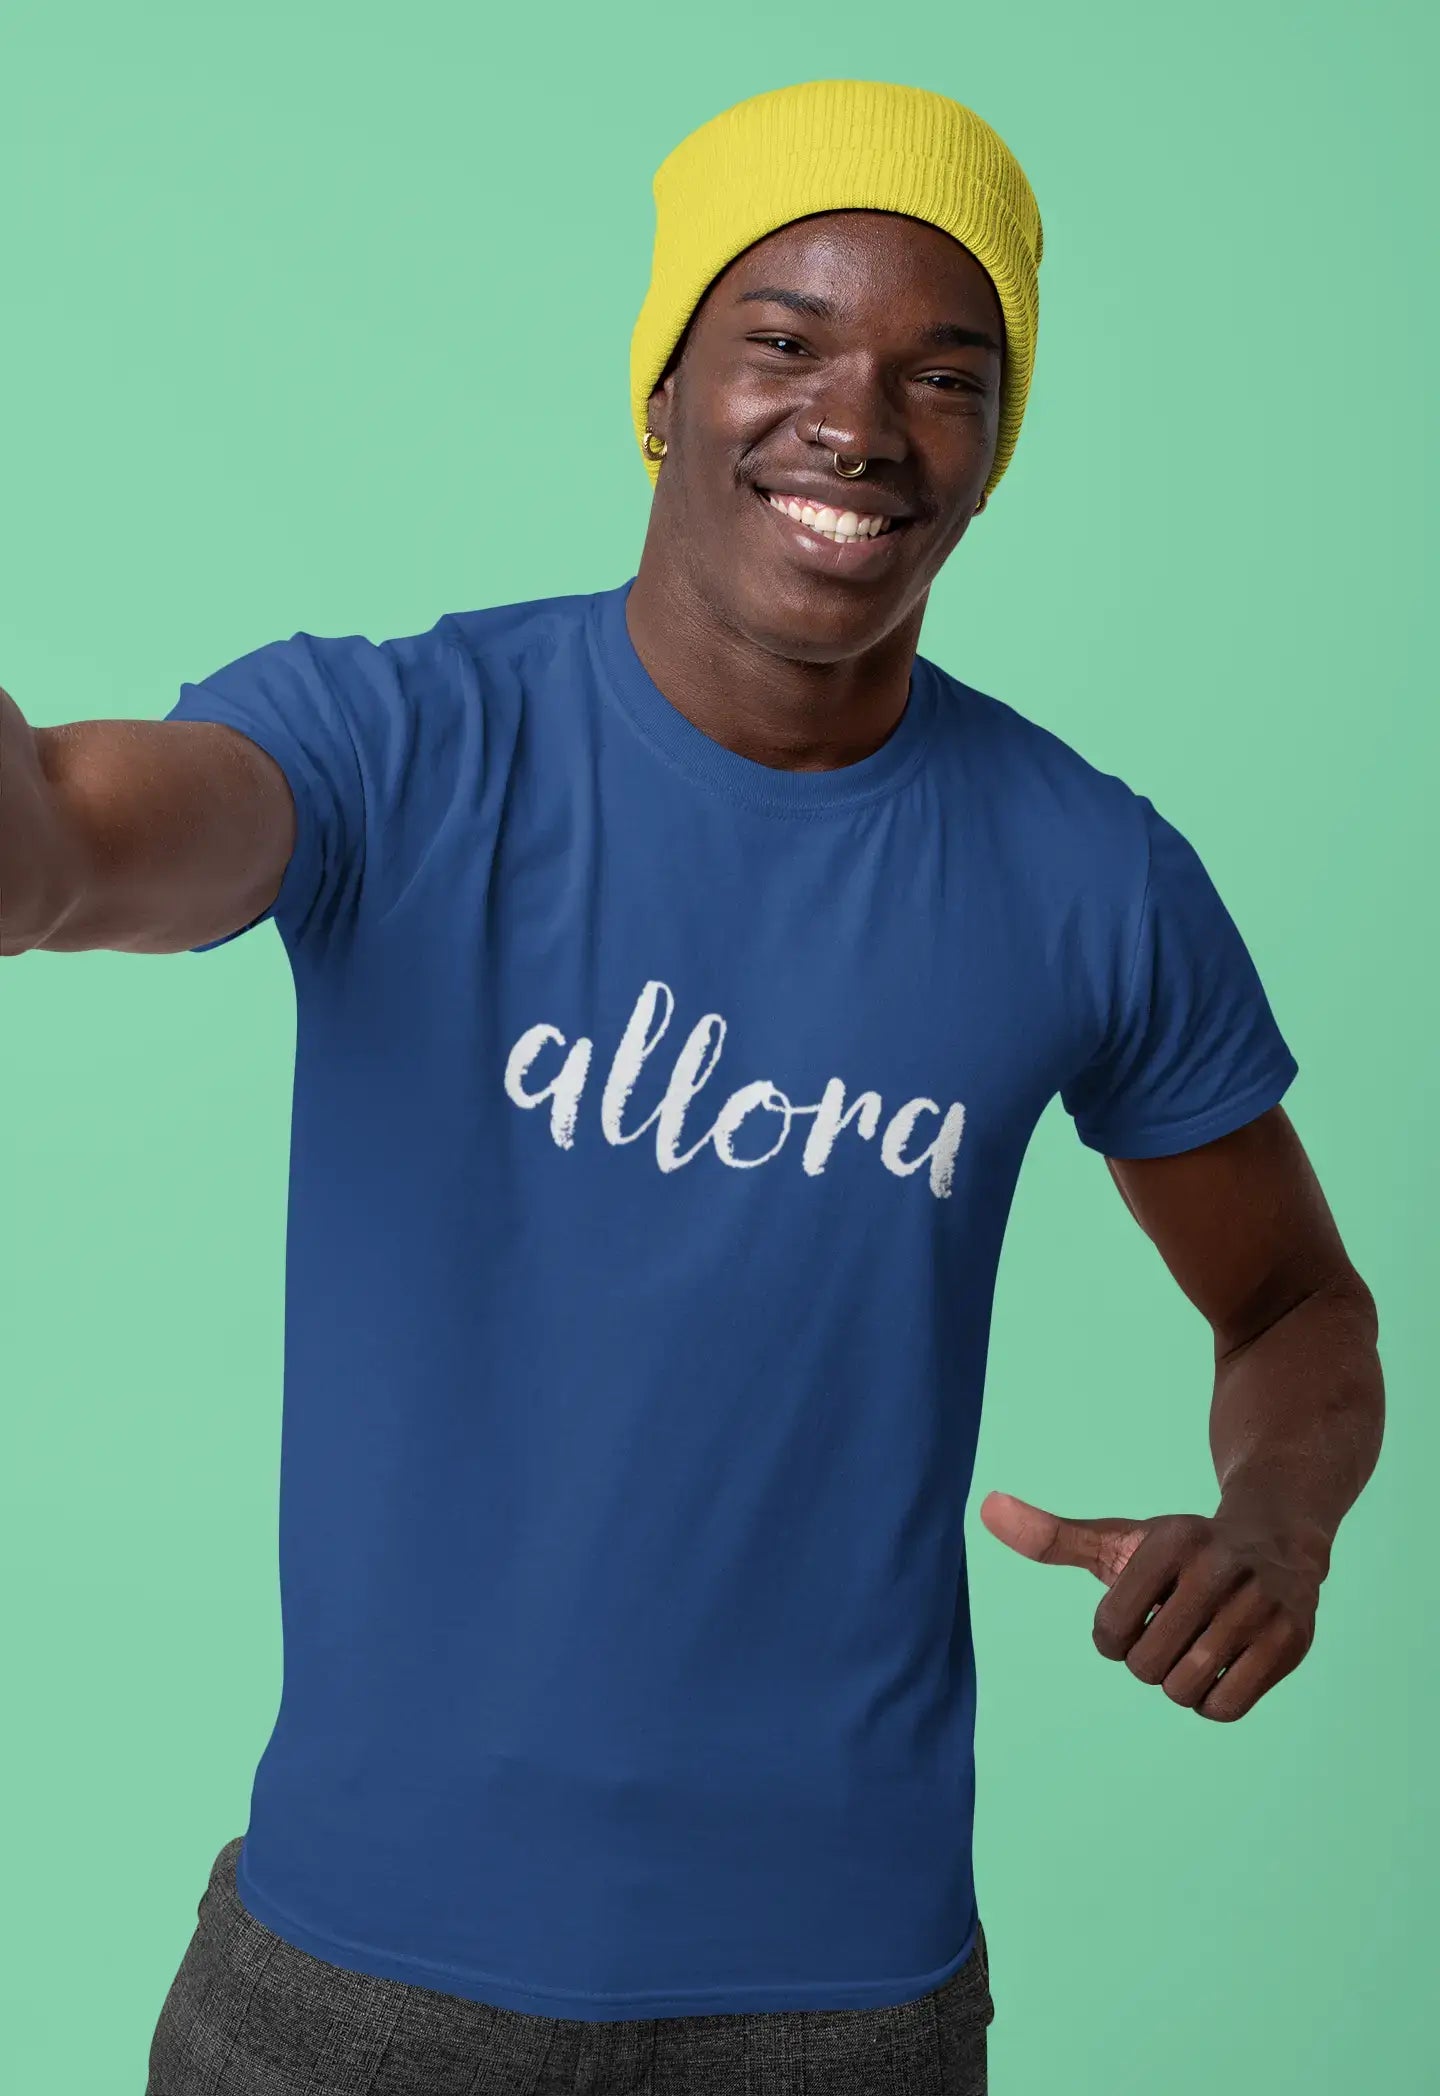 ULTRABASIC - Graphic Printed Men's Allora T-Shirt French Navy